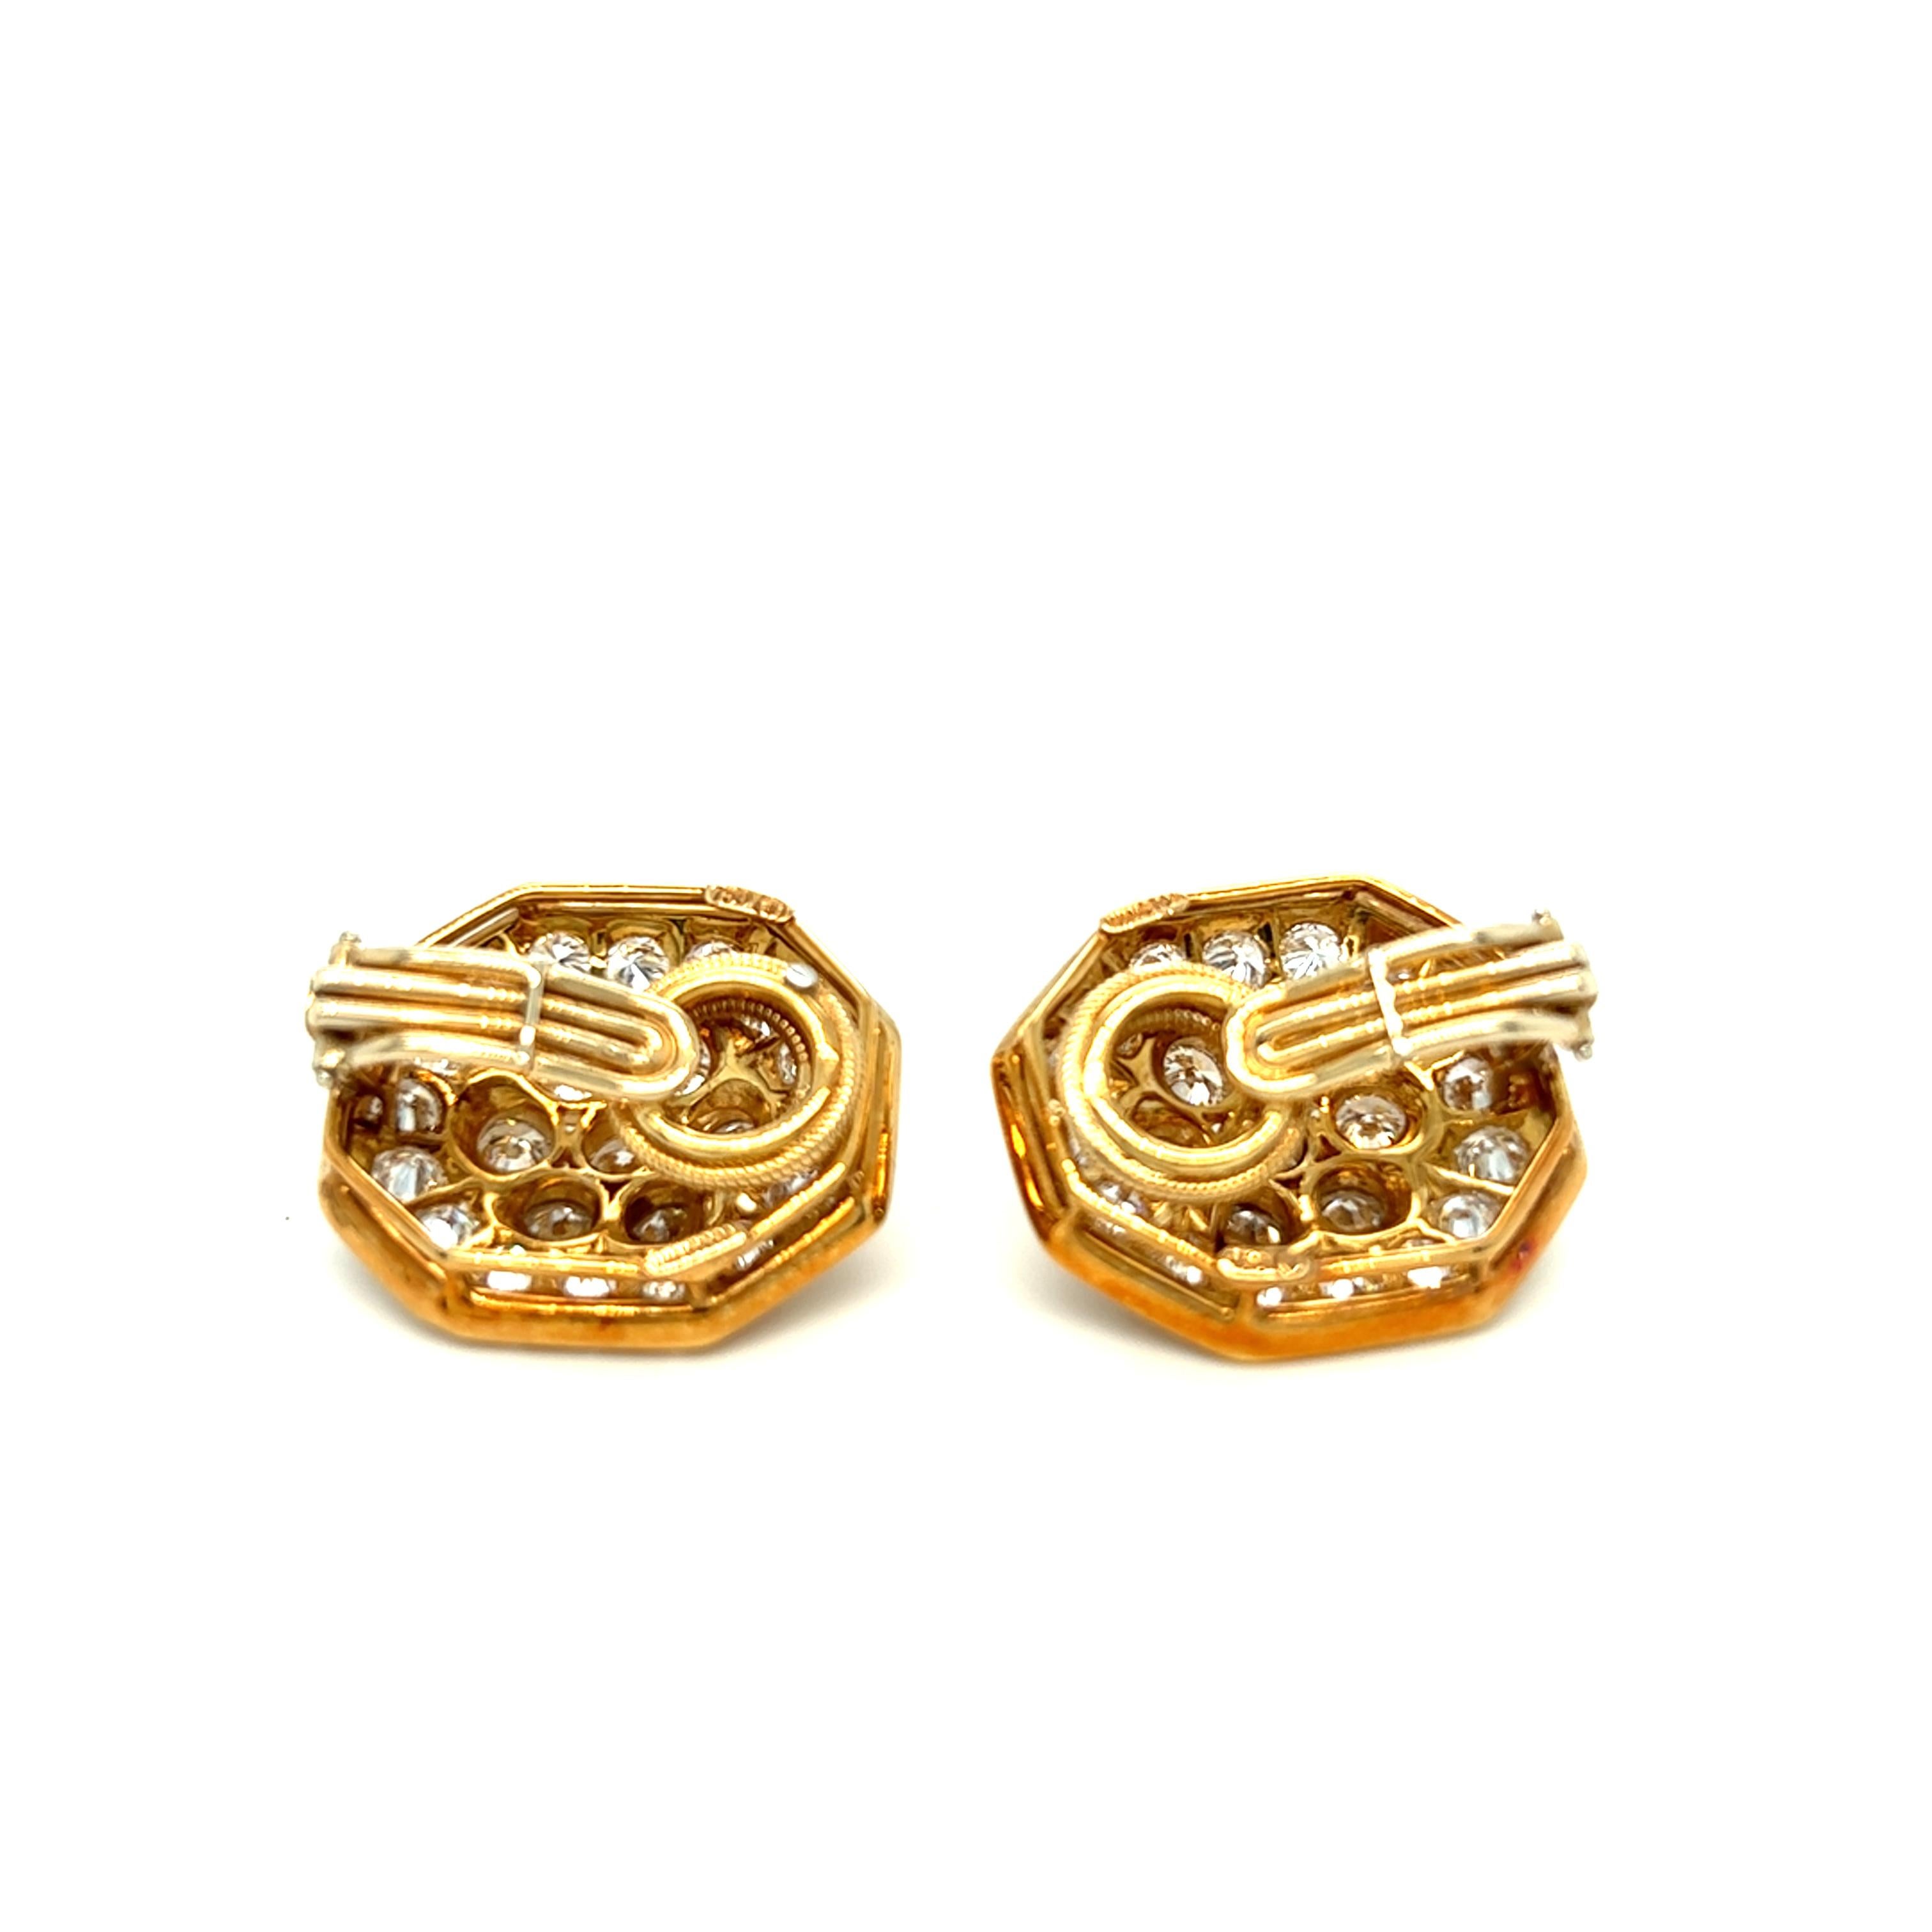 Vintage Harry Winston Cluster Diamond Clip on Earrings 18K Yellow Gold 1